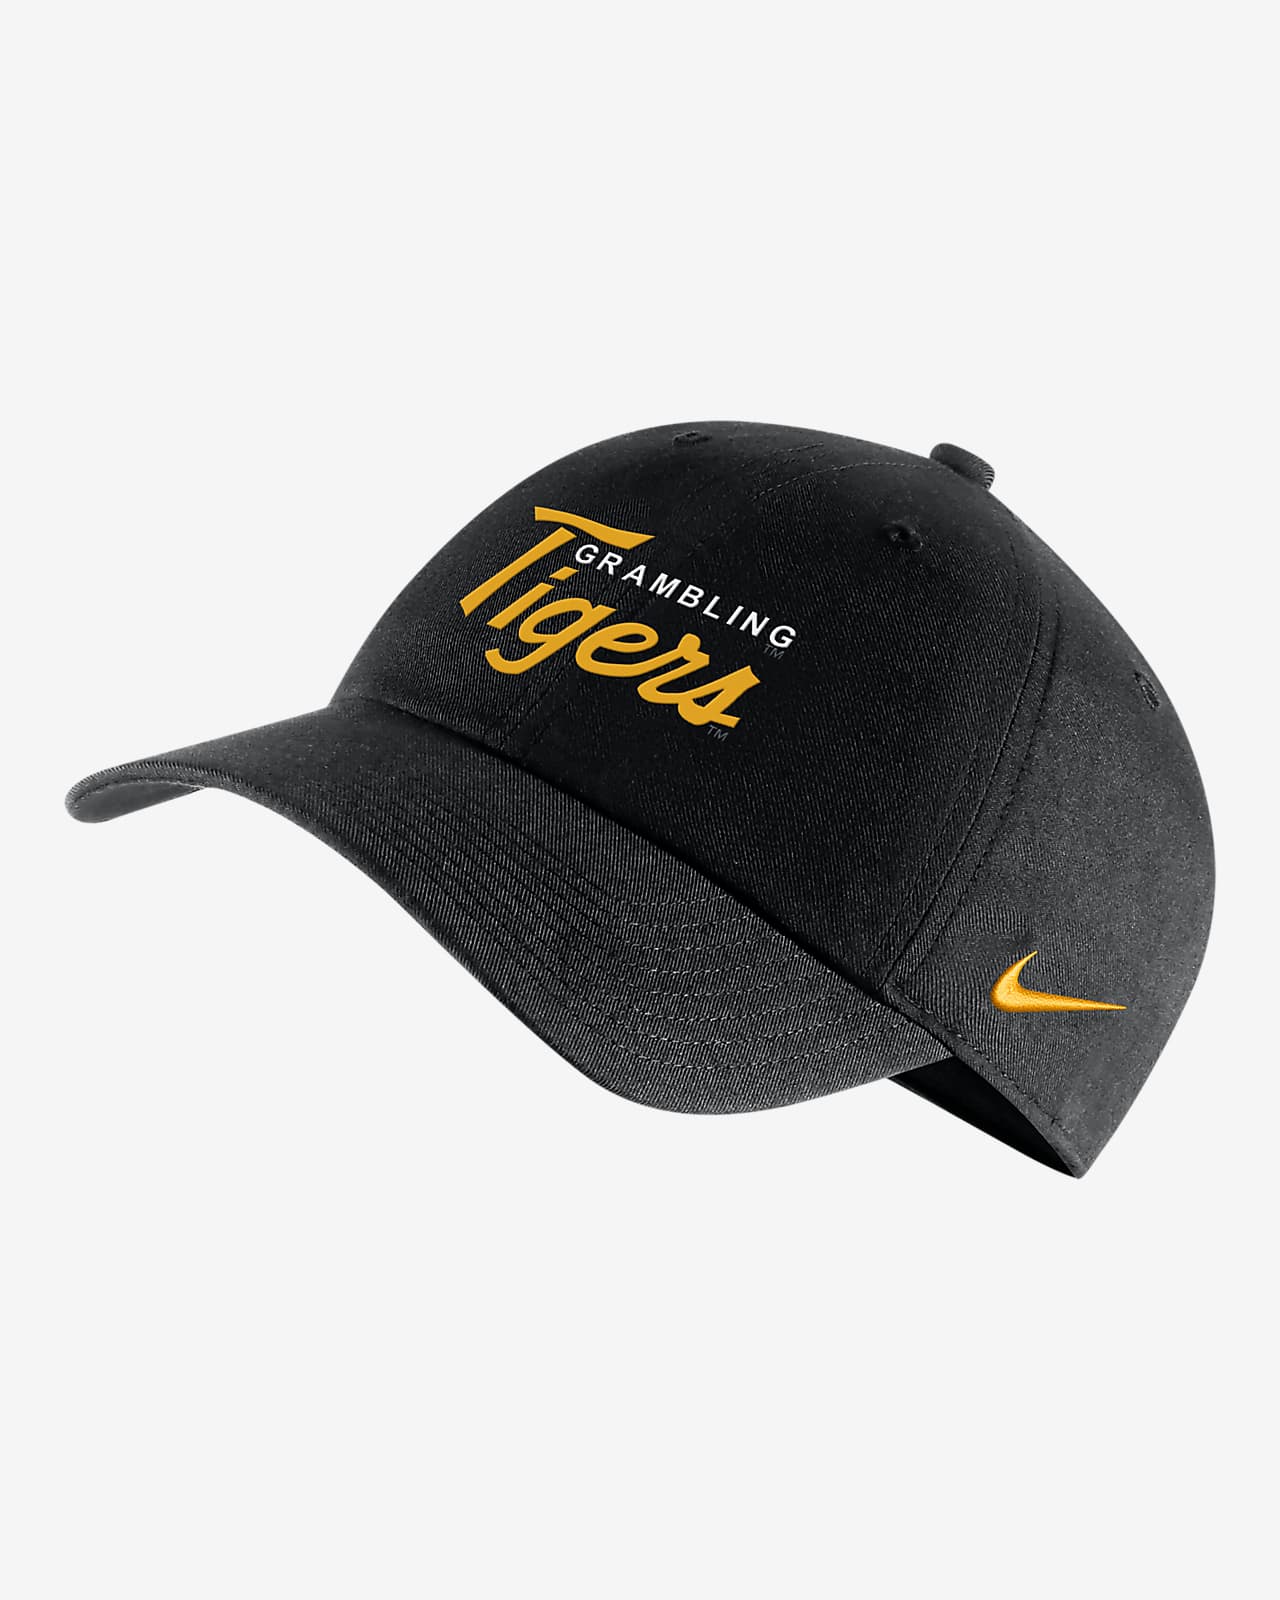 Nike College Campus 365 (Grambling State) Adjustable Hat